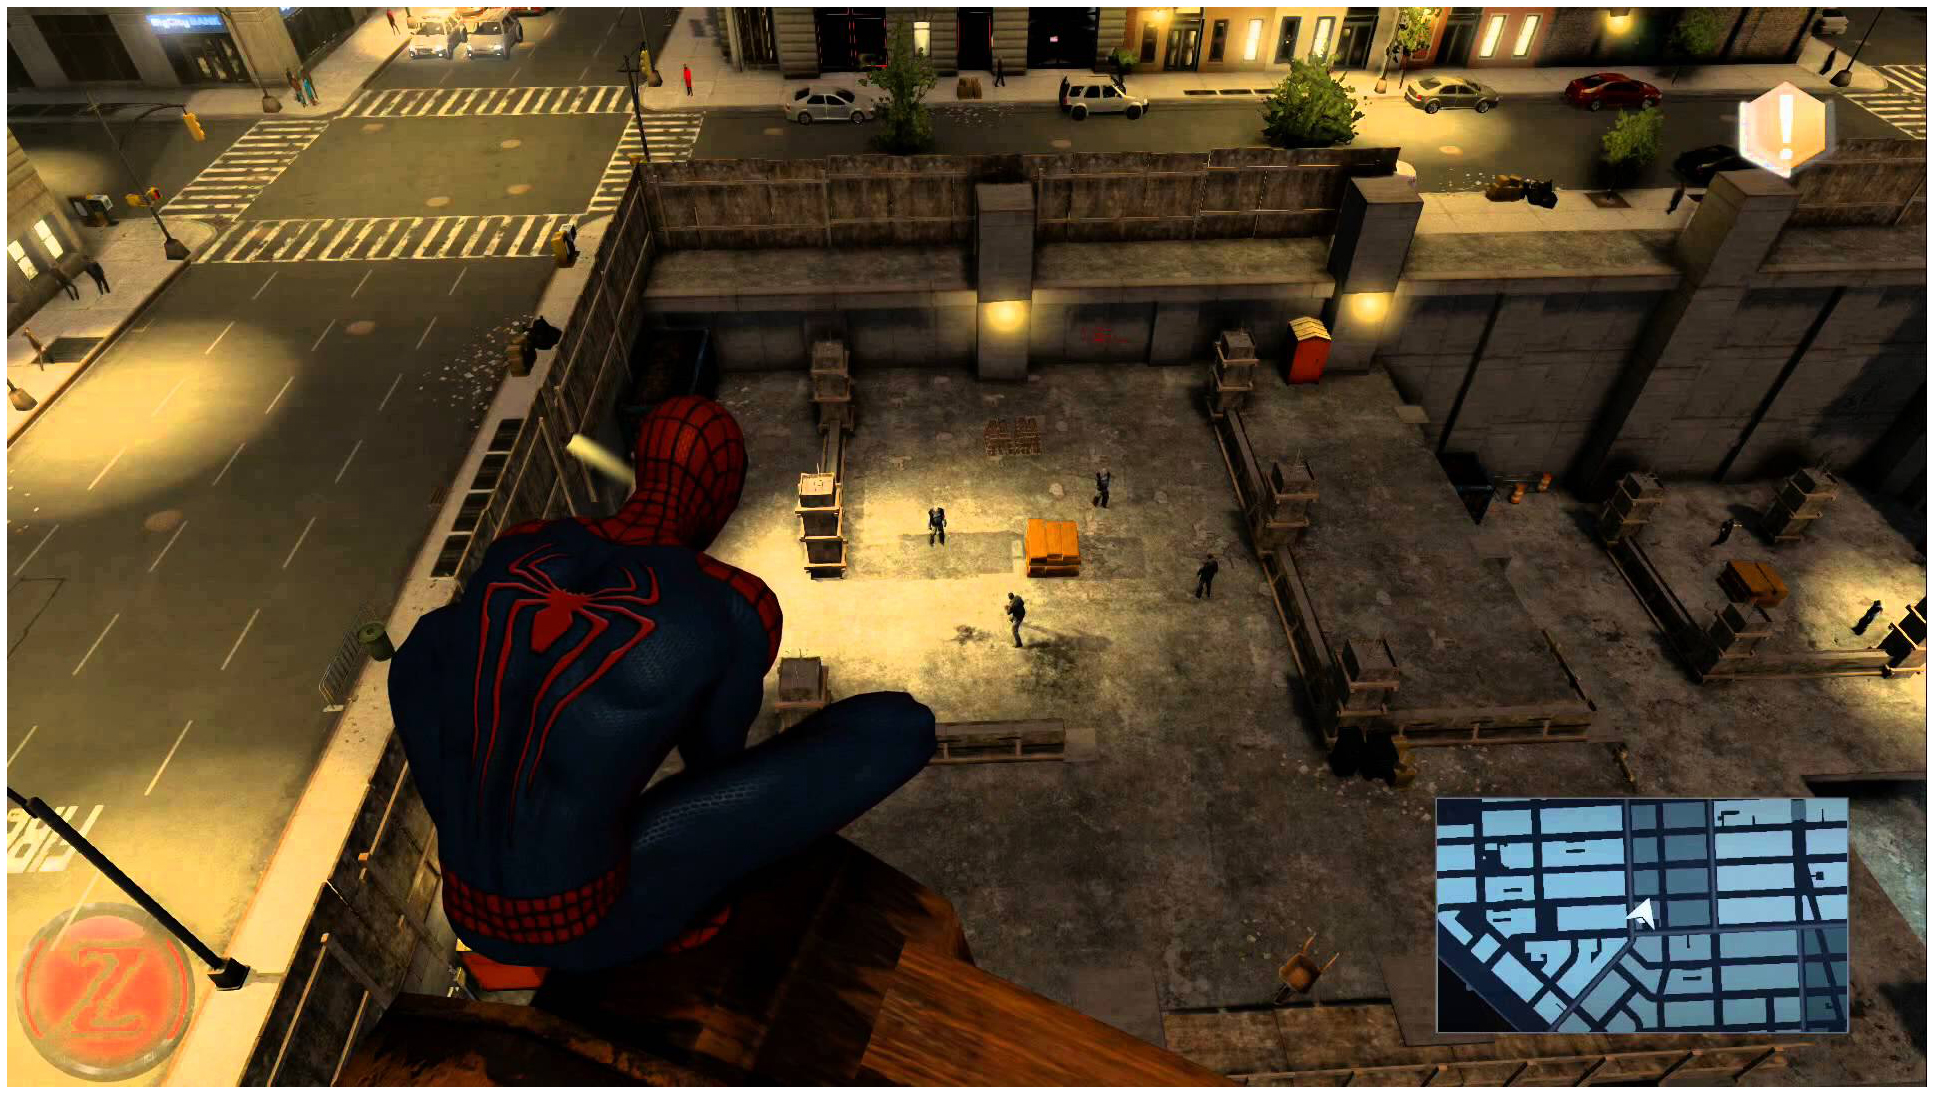 Спайдер 2 на пк. The amazing Spider-man (игра, 2012). The amazing Spider man 2 игра геймплей. The amazing Spider man 1 игра геймплей. Человек паук игра 2012.